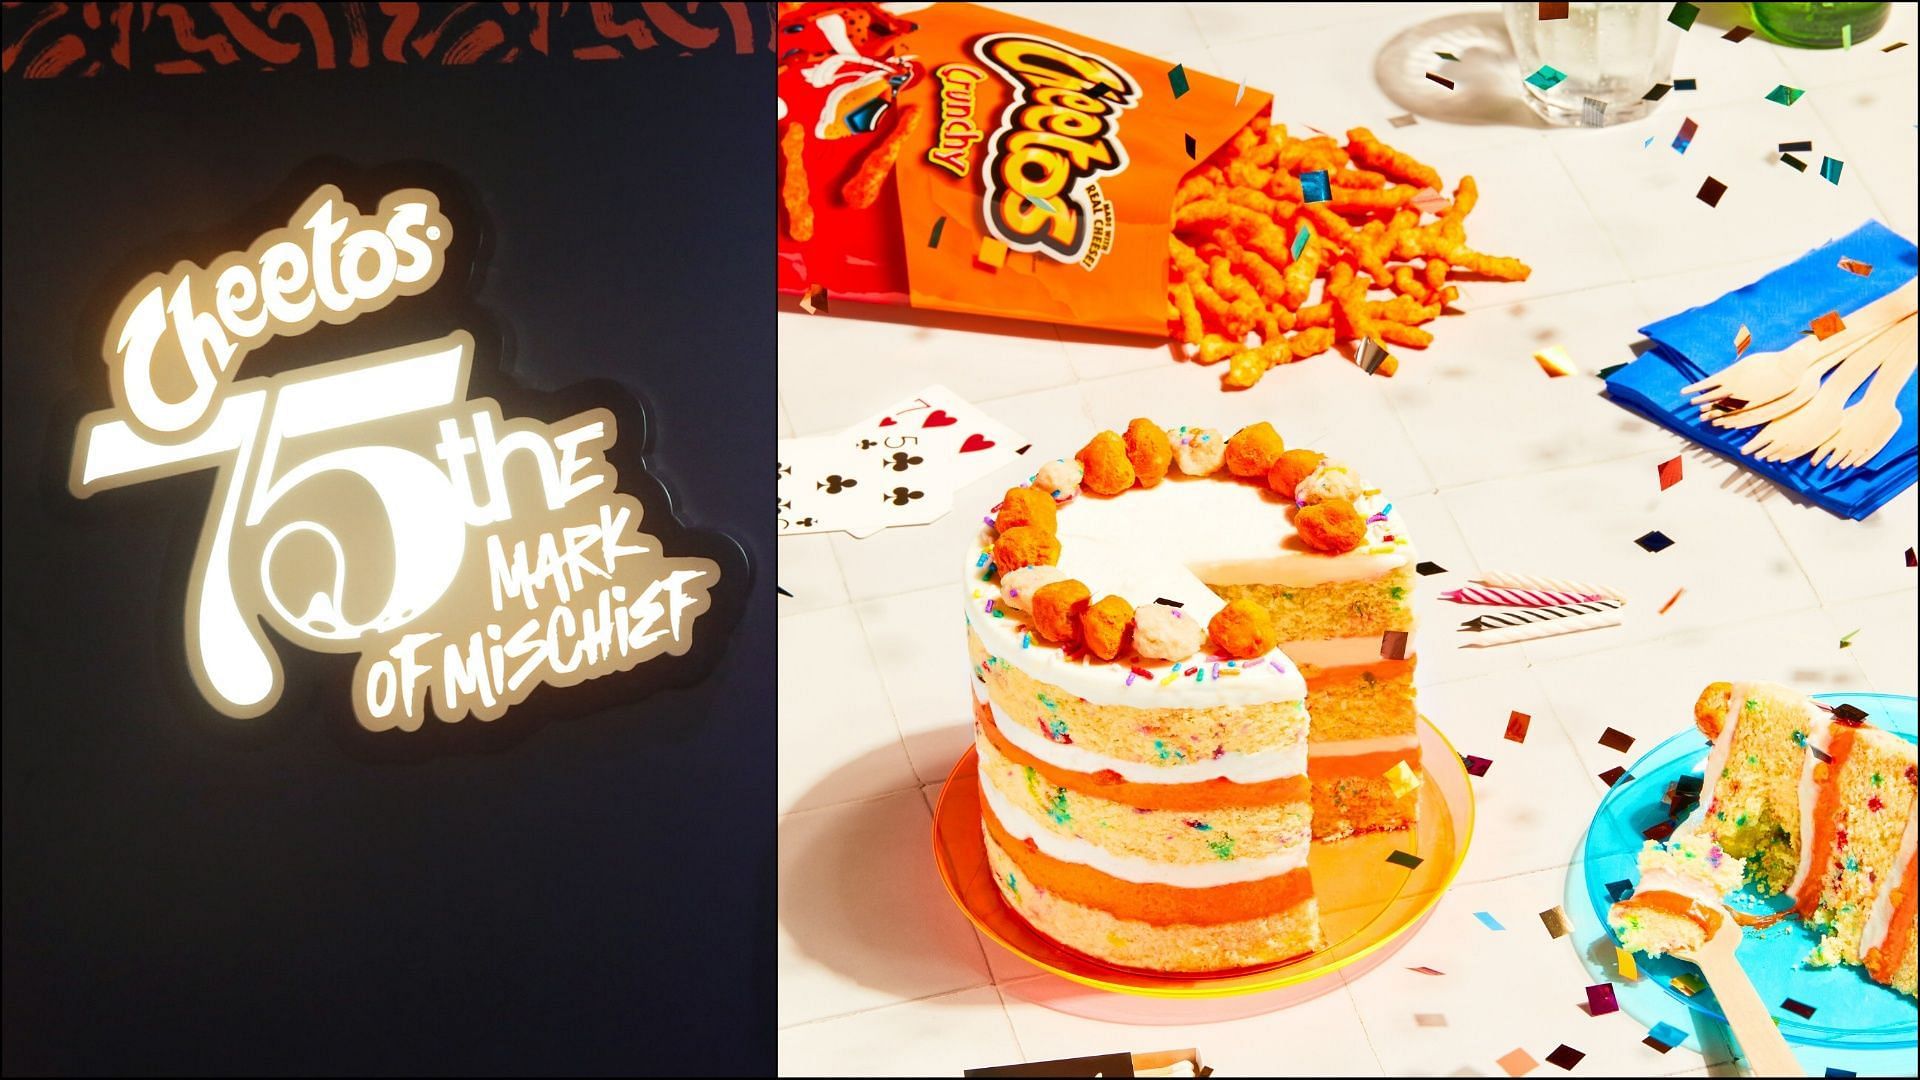 Milk Bar introduced a new Cheetos x Milk Bar Birthday Cake commemorating 75 years of Cheetos (Image via PR Newswire)